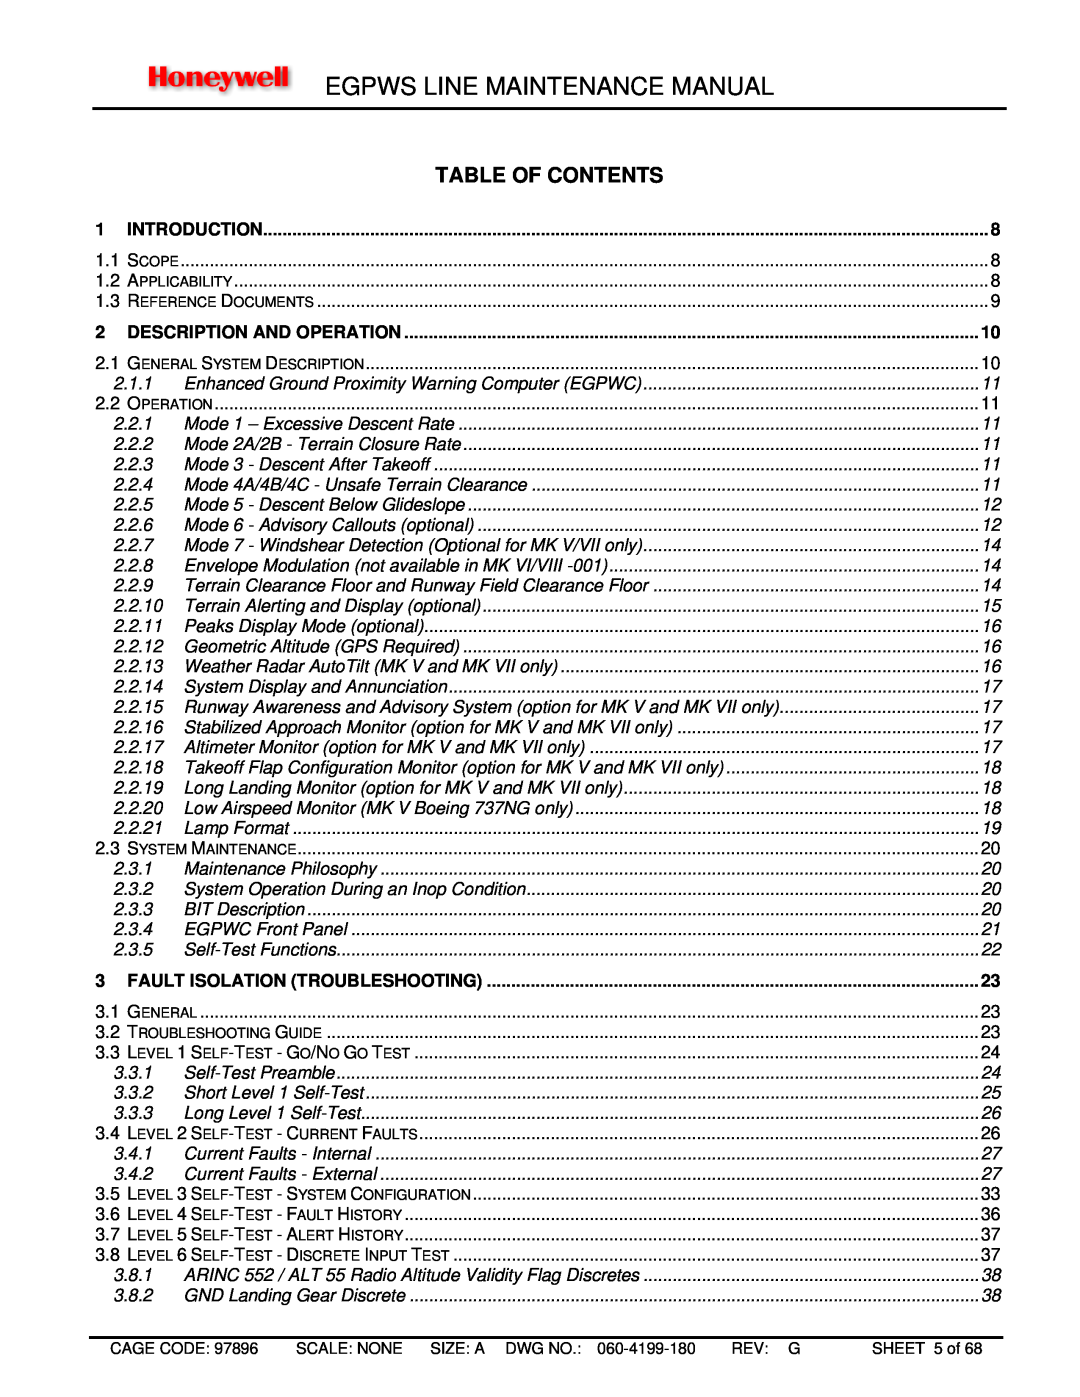 Honeywell MK VIII, MK XXII manual Table Of Contents, Egpws Line Maintenance Manual 